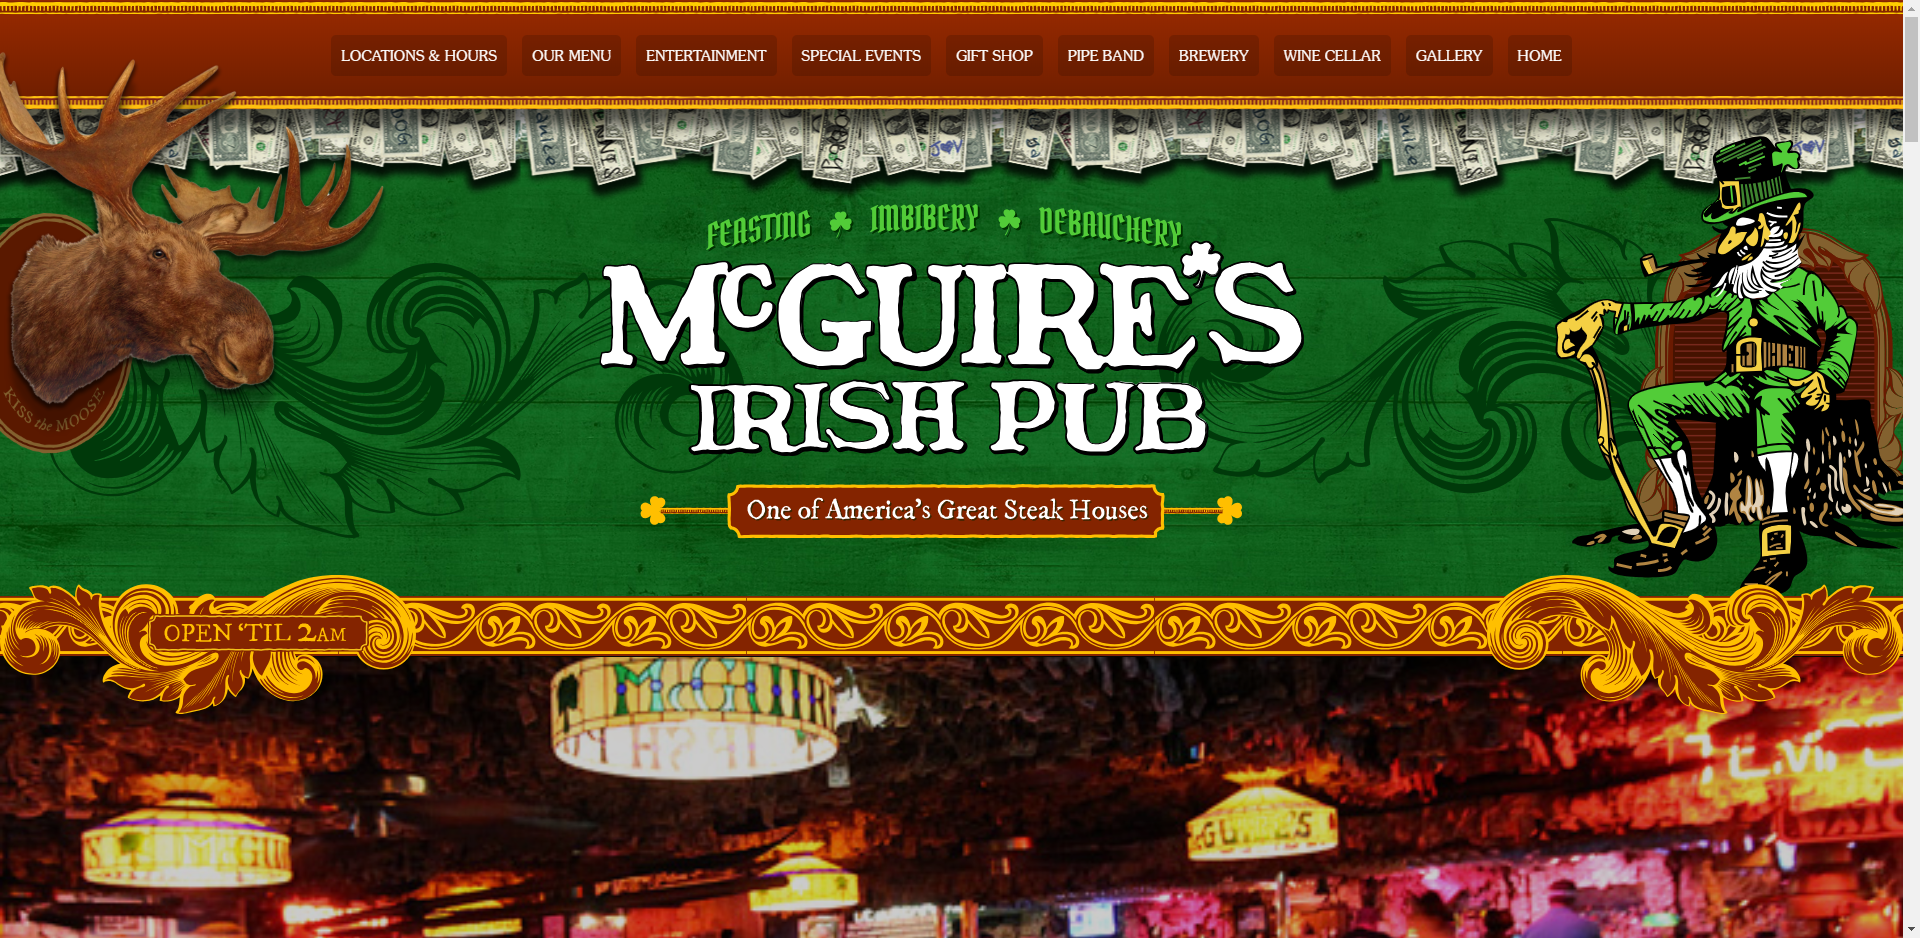 McGuires Irish Pub website screenshot